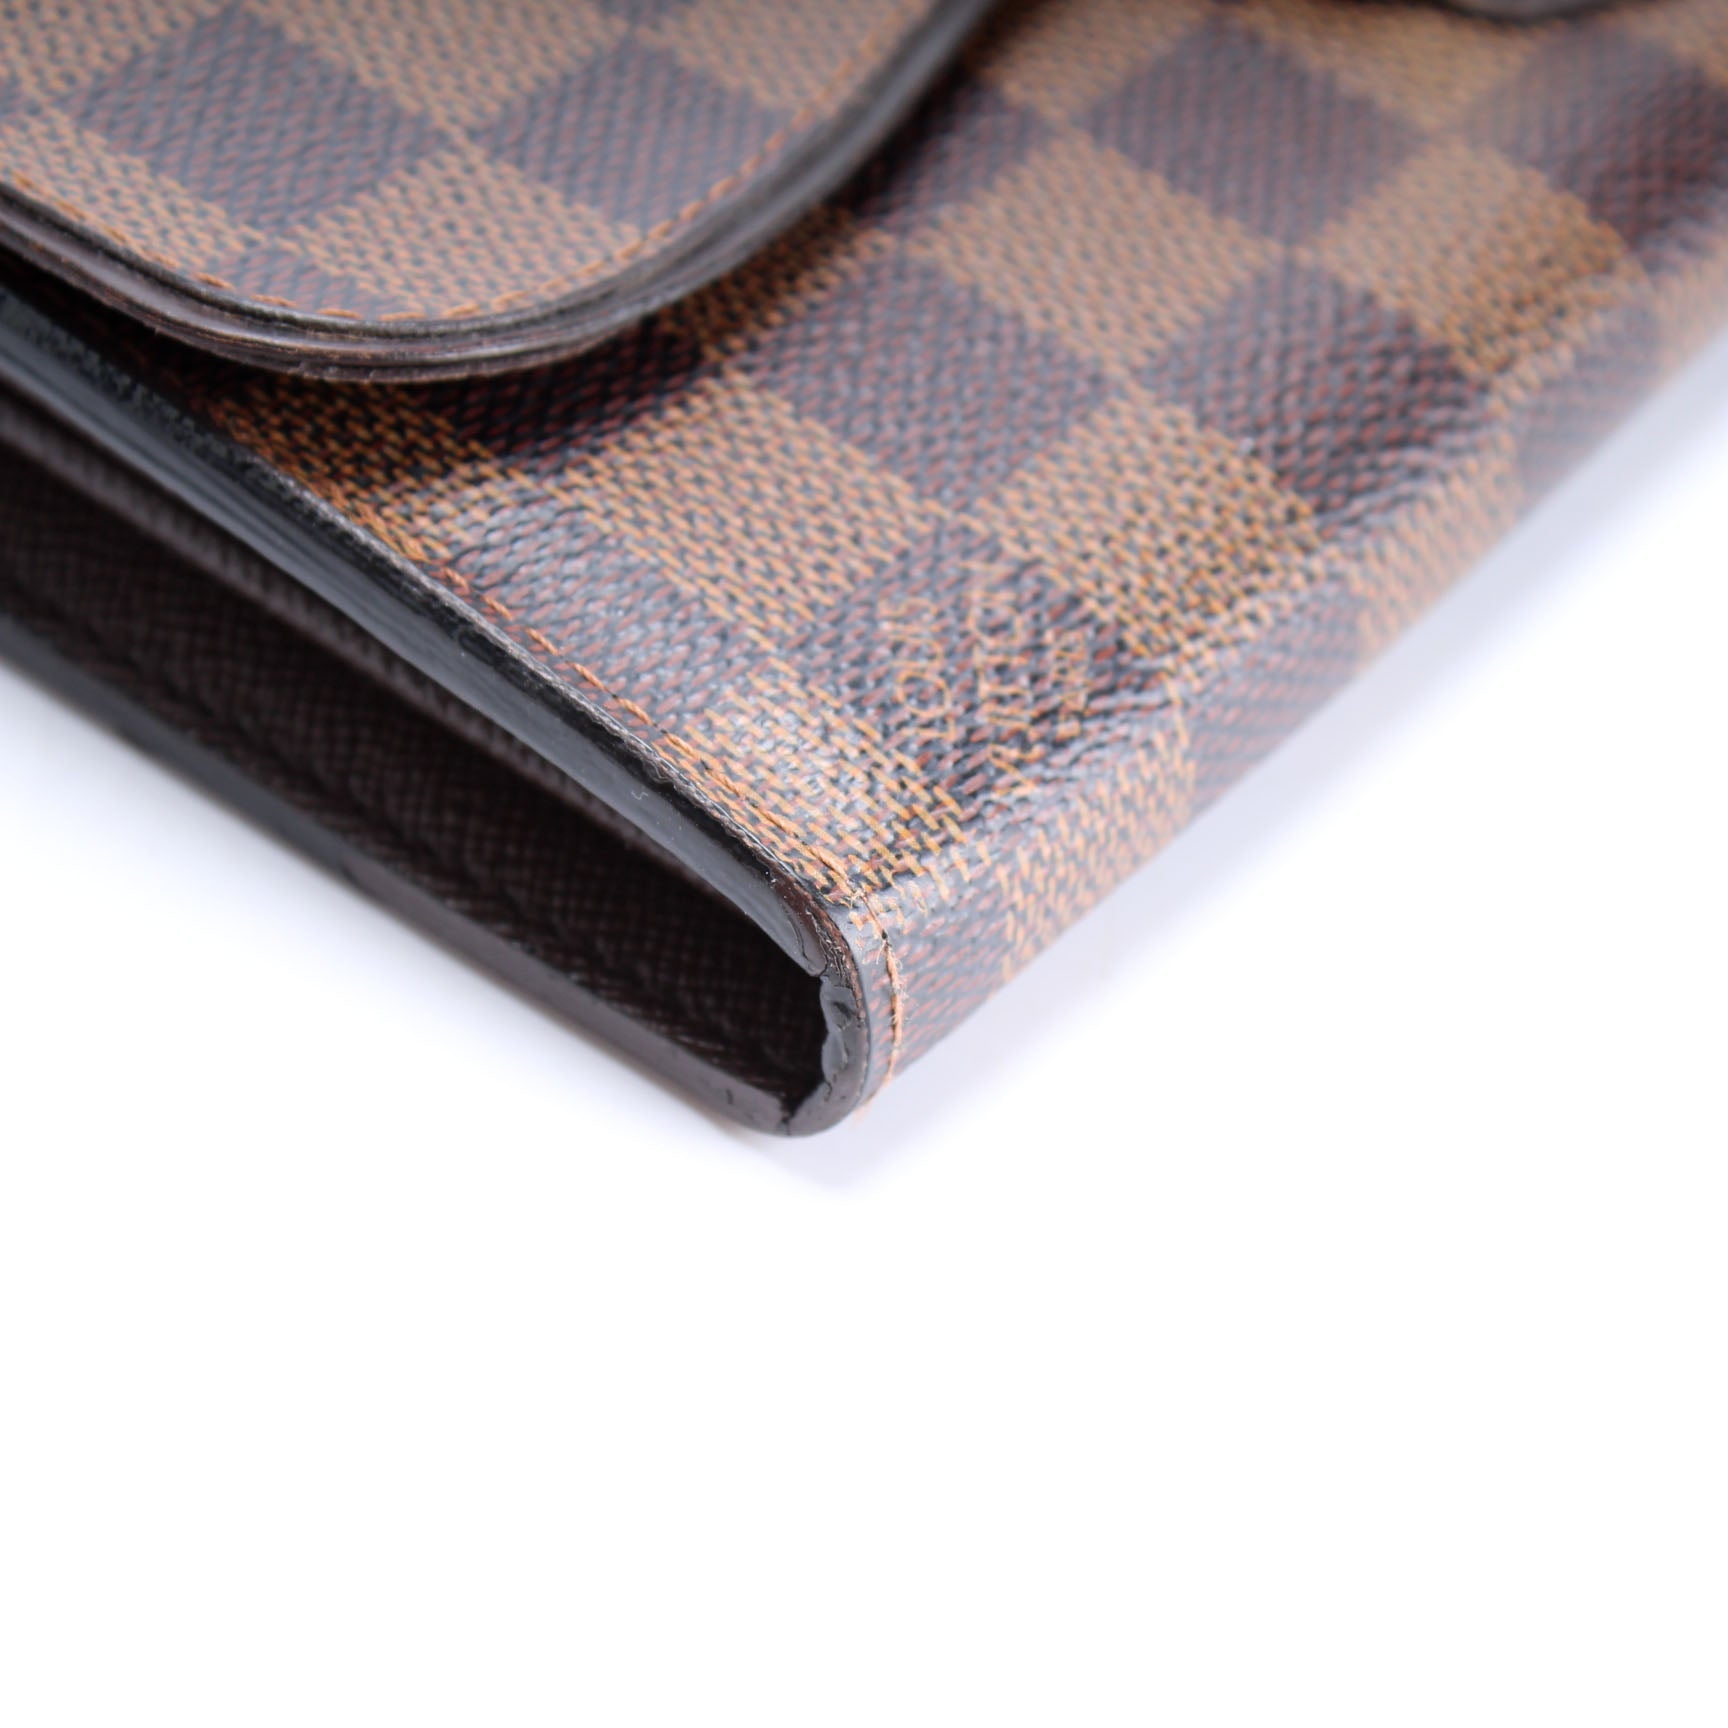 Gorgeous Authentic Louis Vuitton Damier Ebene Sistina Long Wallet w/Dustbag